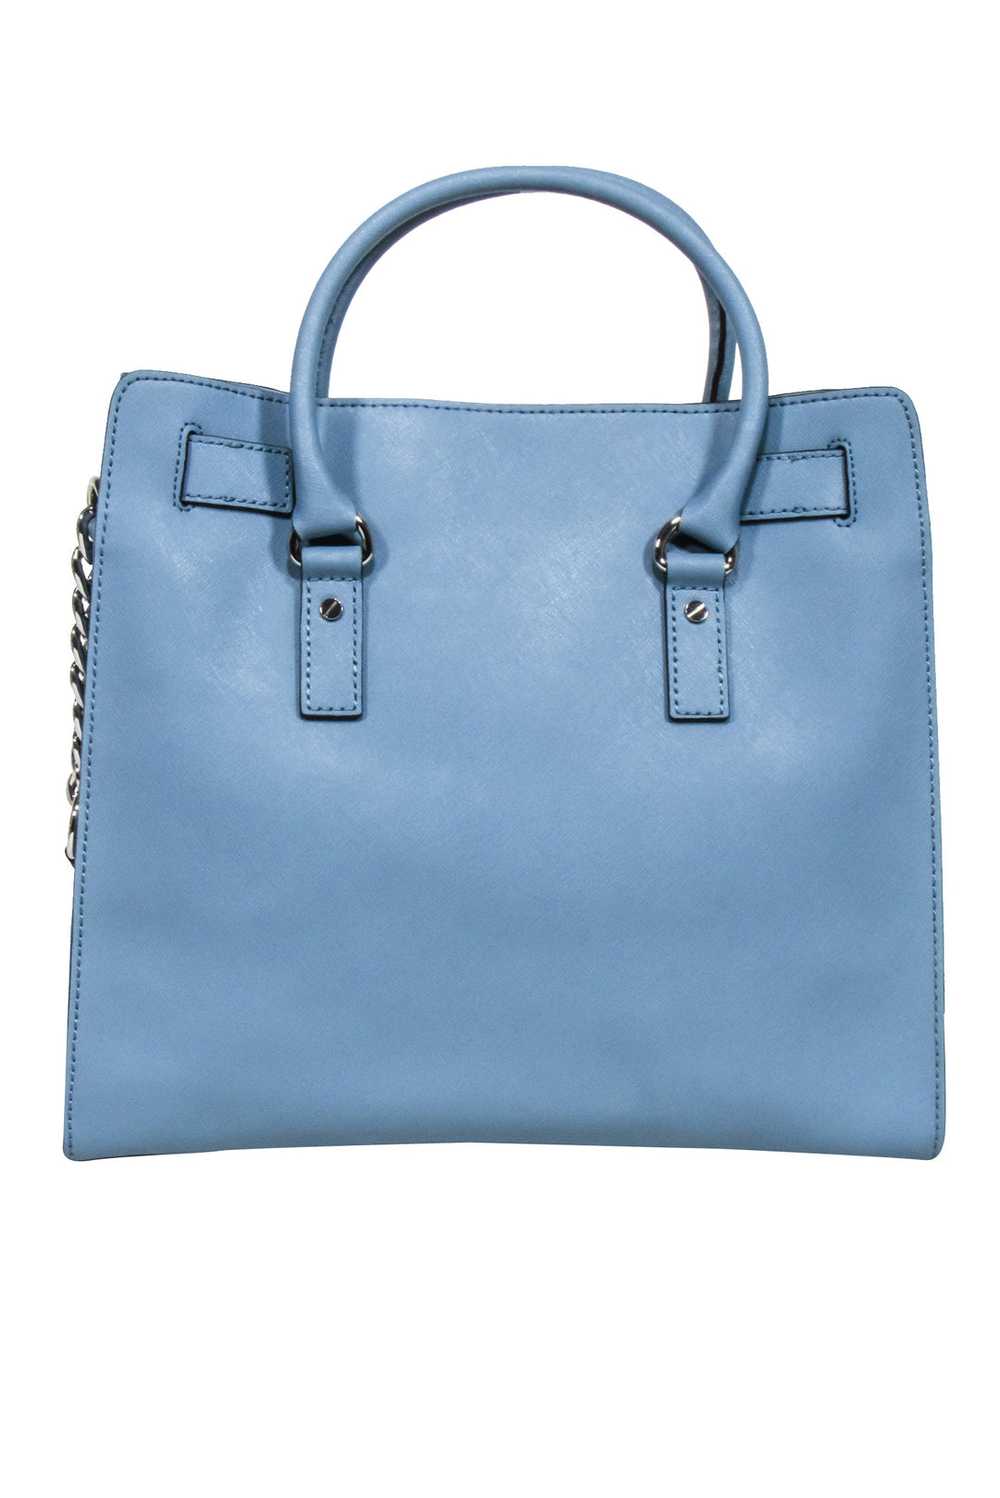 Michael Kors -Light Blue Leather Tote Bag - image 3